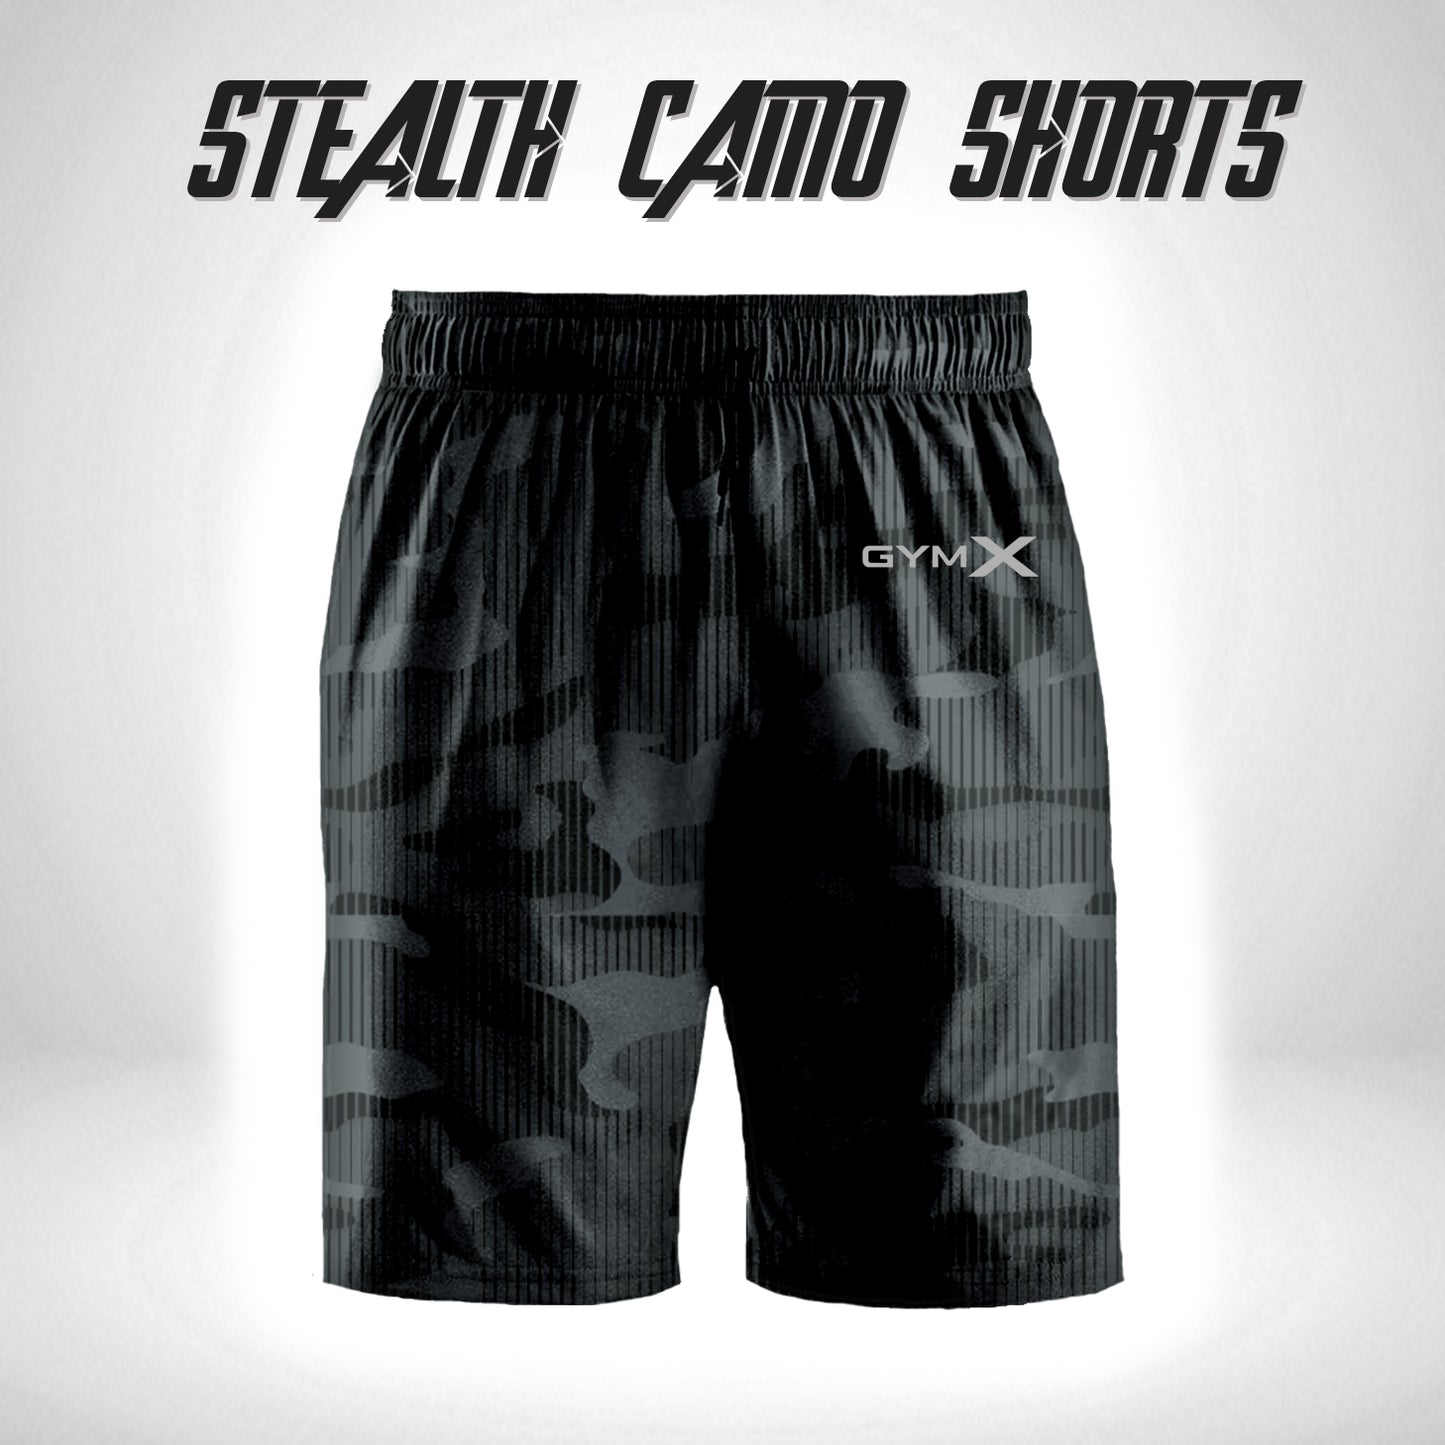 Stealth Camo Shorts(4 way stretch)- Sale